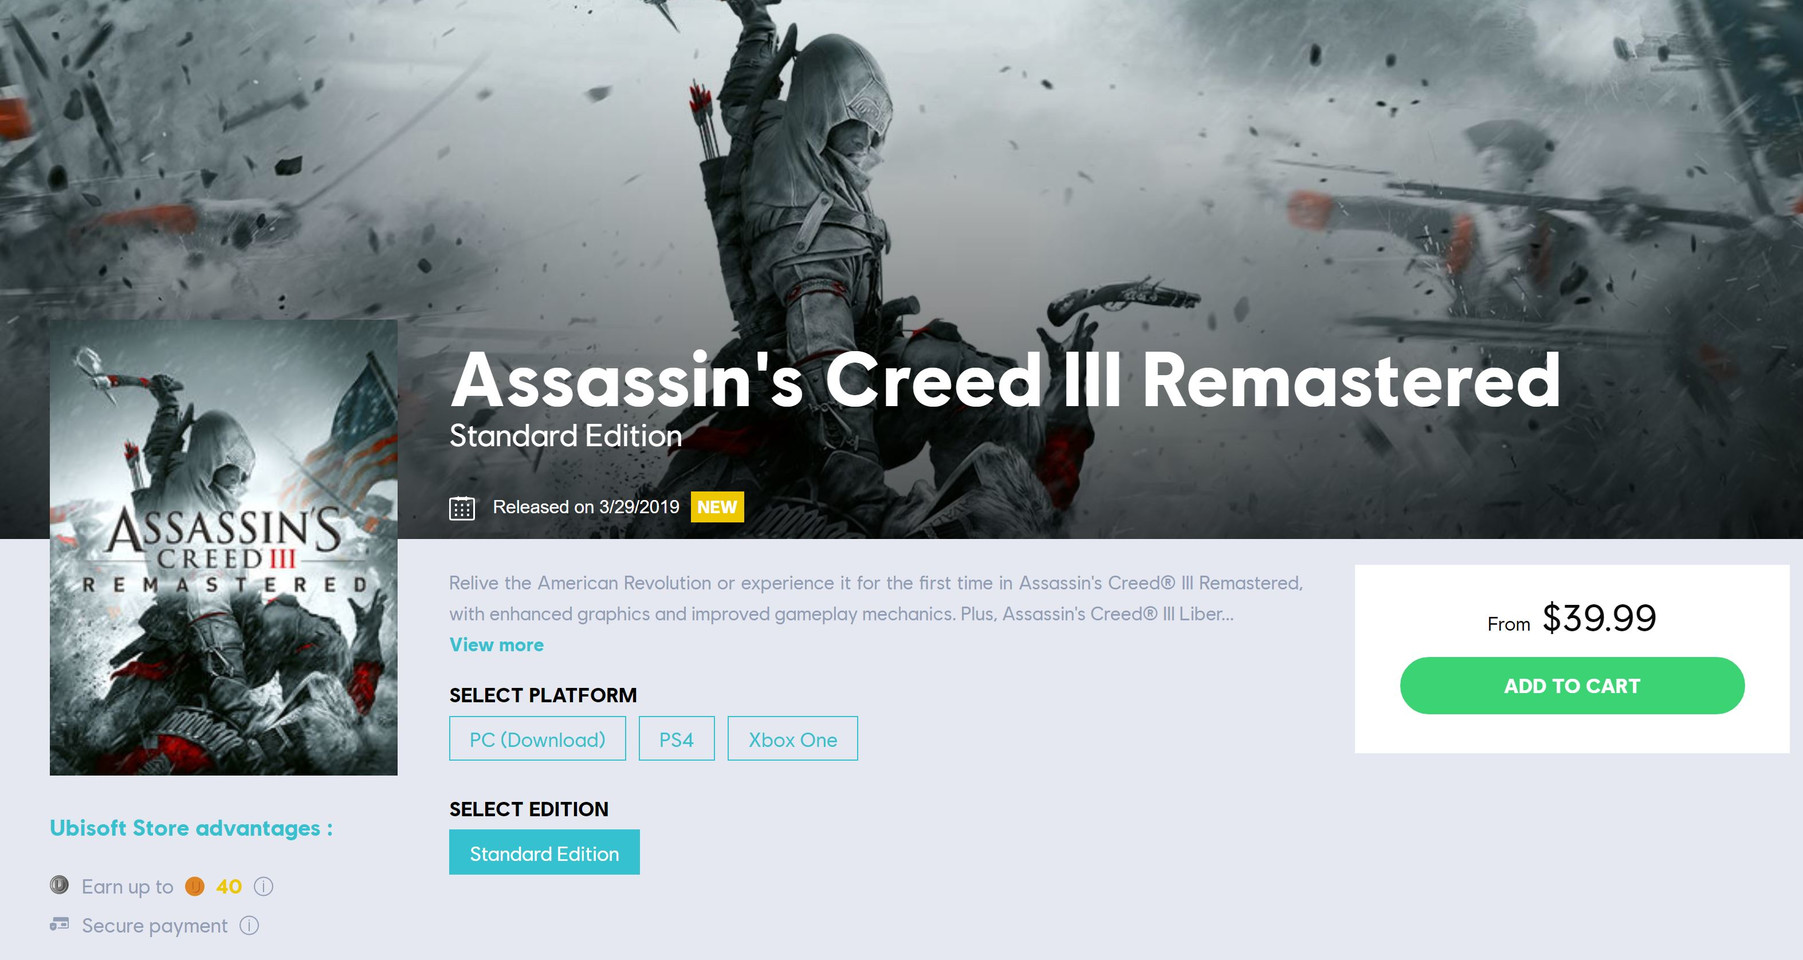 Uplay user getnameutf8. Assassins Creed 3 Steam. Assassin's Creed 3 Uplay. Хронология Assassins Creed. Assassin's Creed 3 награды Uplay.